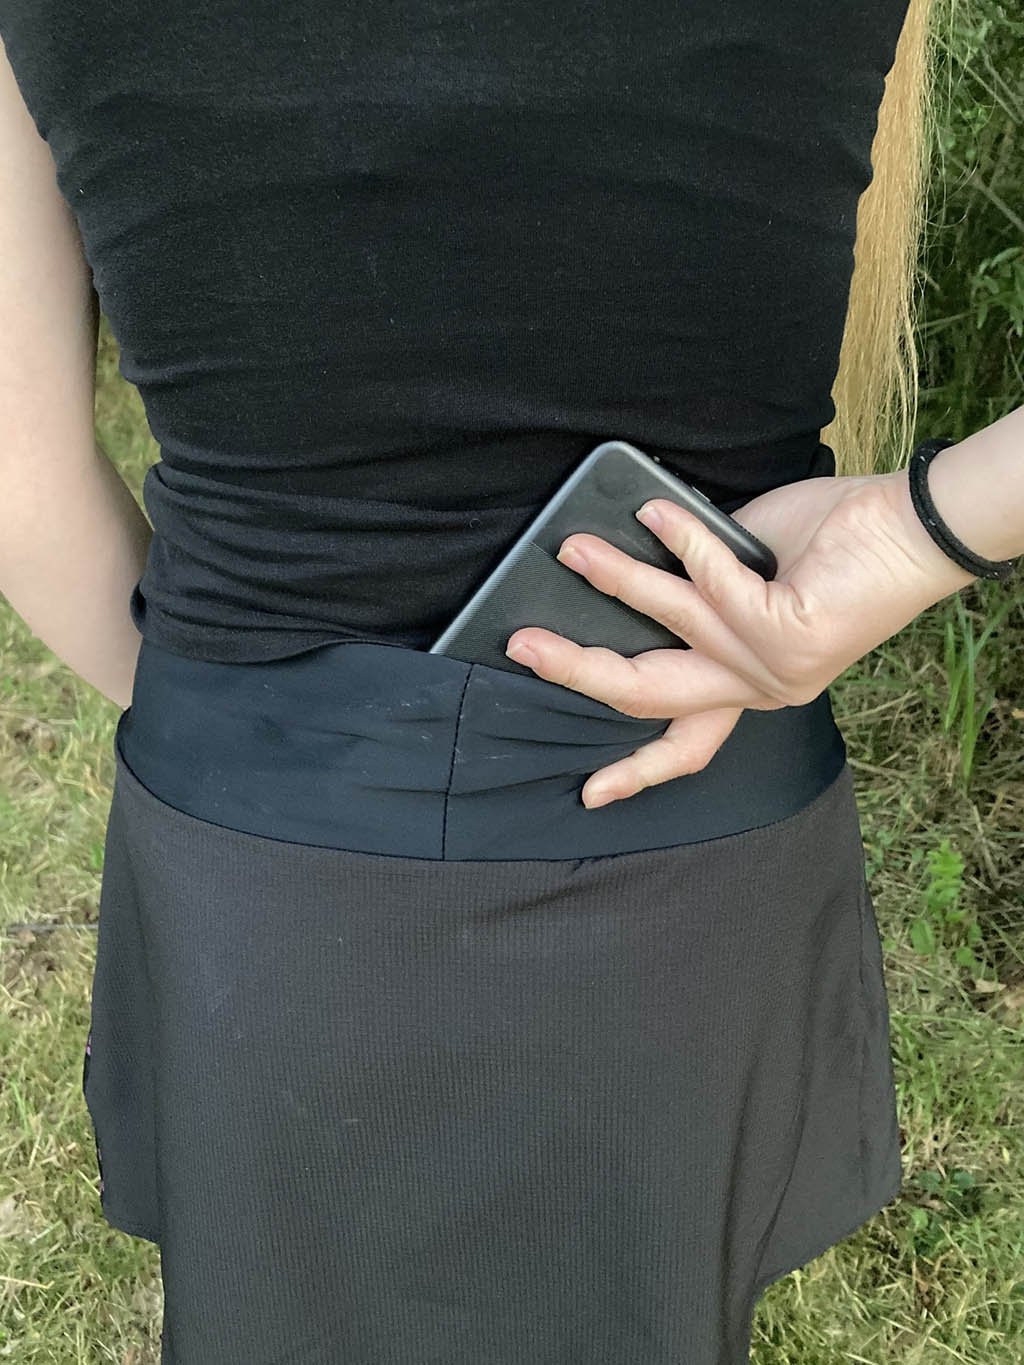 Skirt with 3/4 length leggings - black with aqua paws